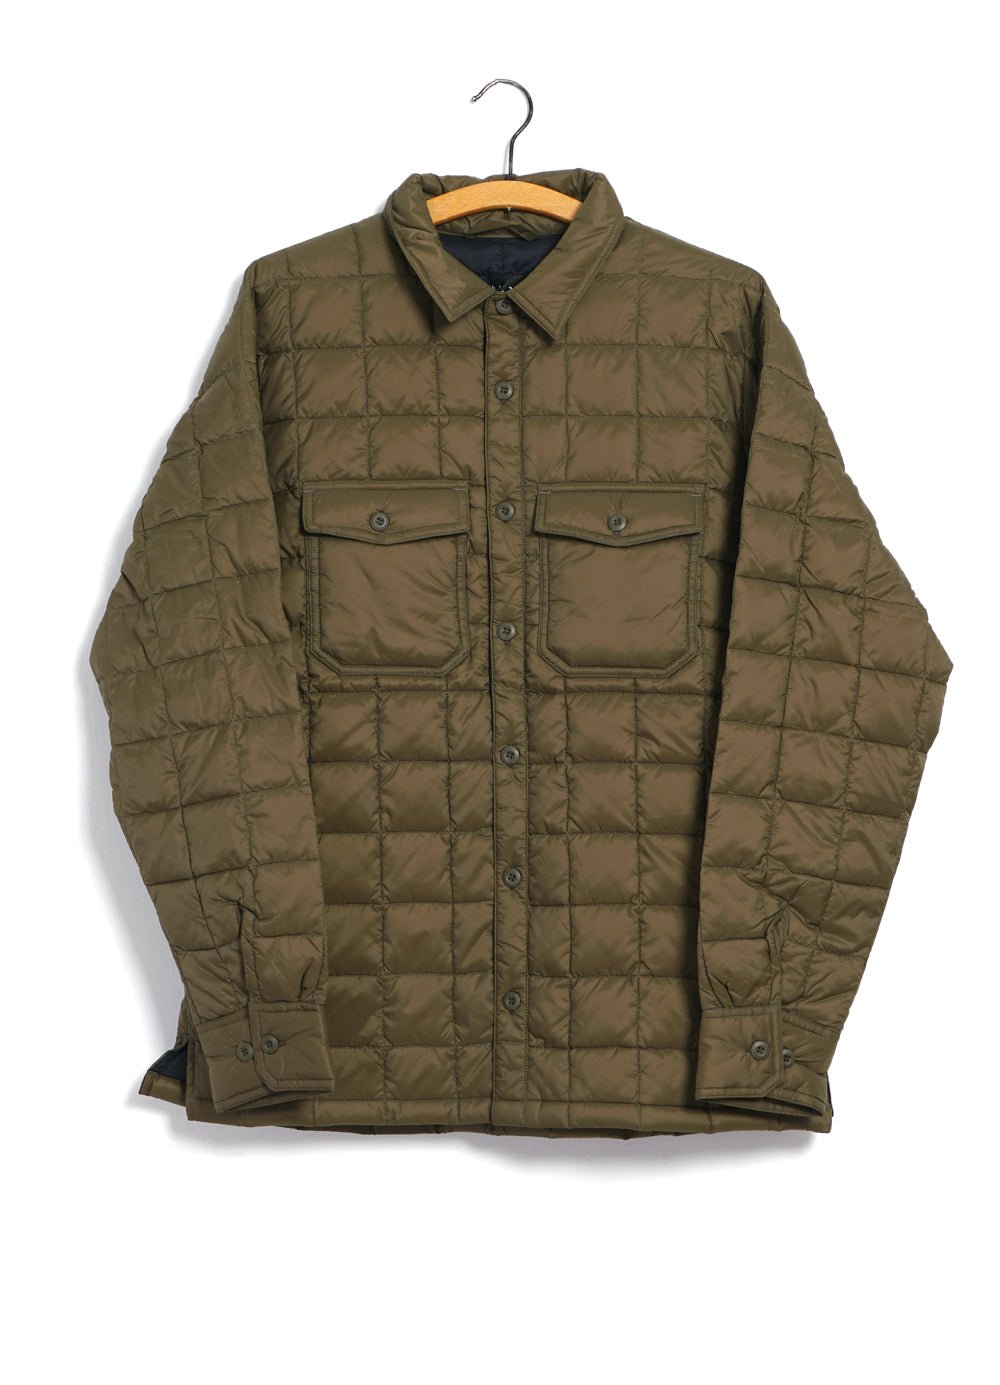 TAION - MOUNTAIN SHIRT | Long Sleeve Down Jacket | Olive - HANSEN Garments